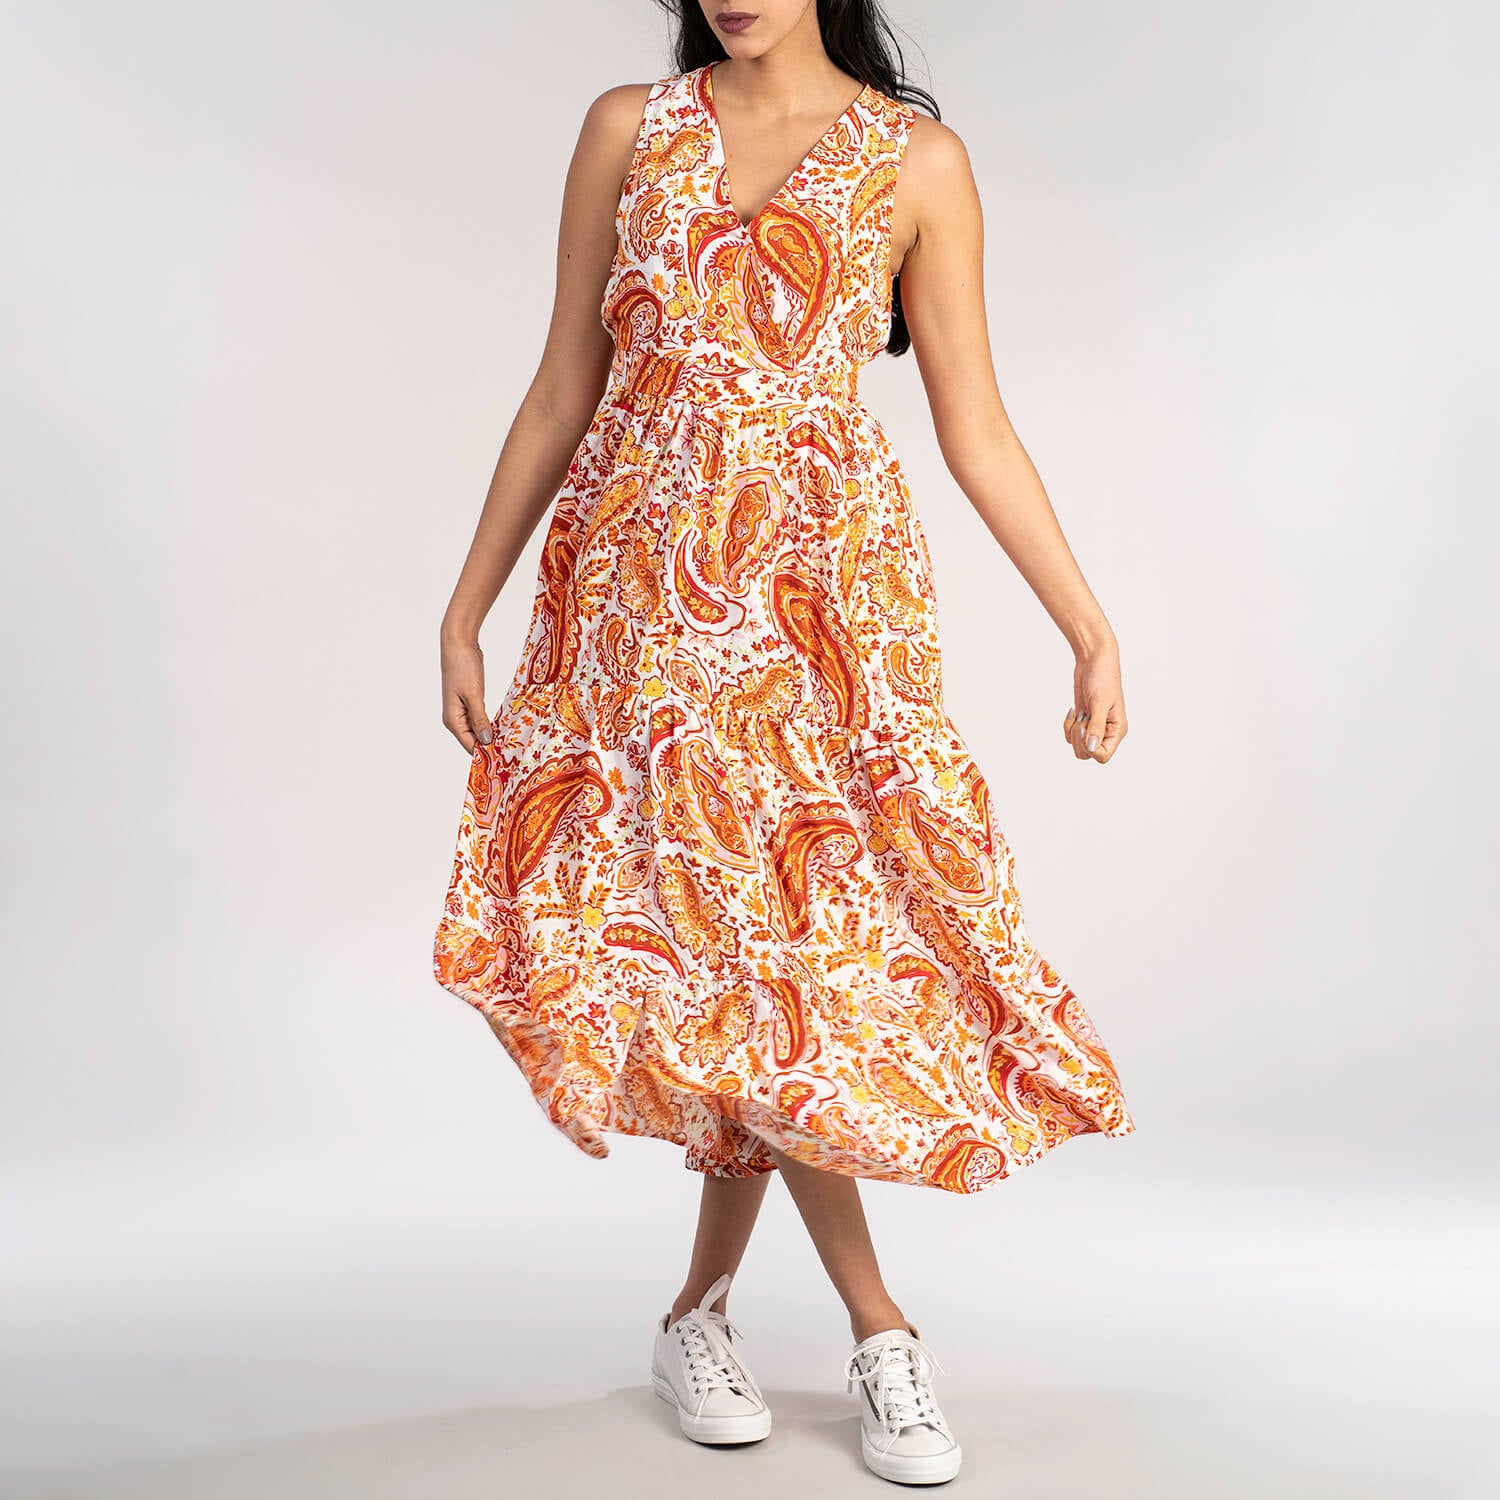 Naoise V Neck Sleeveless Dress - Coral 2 Shaws Department Stores